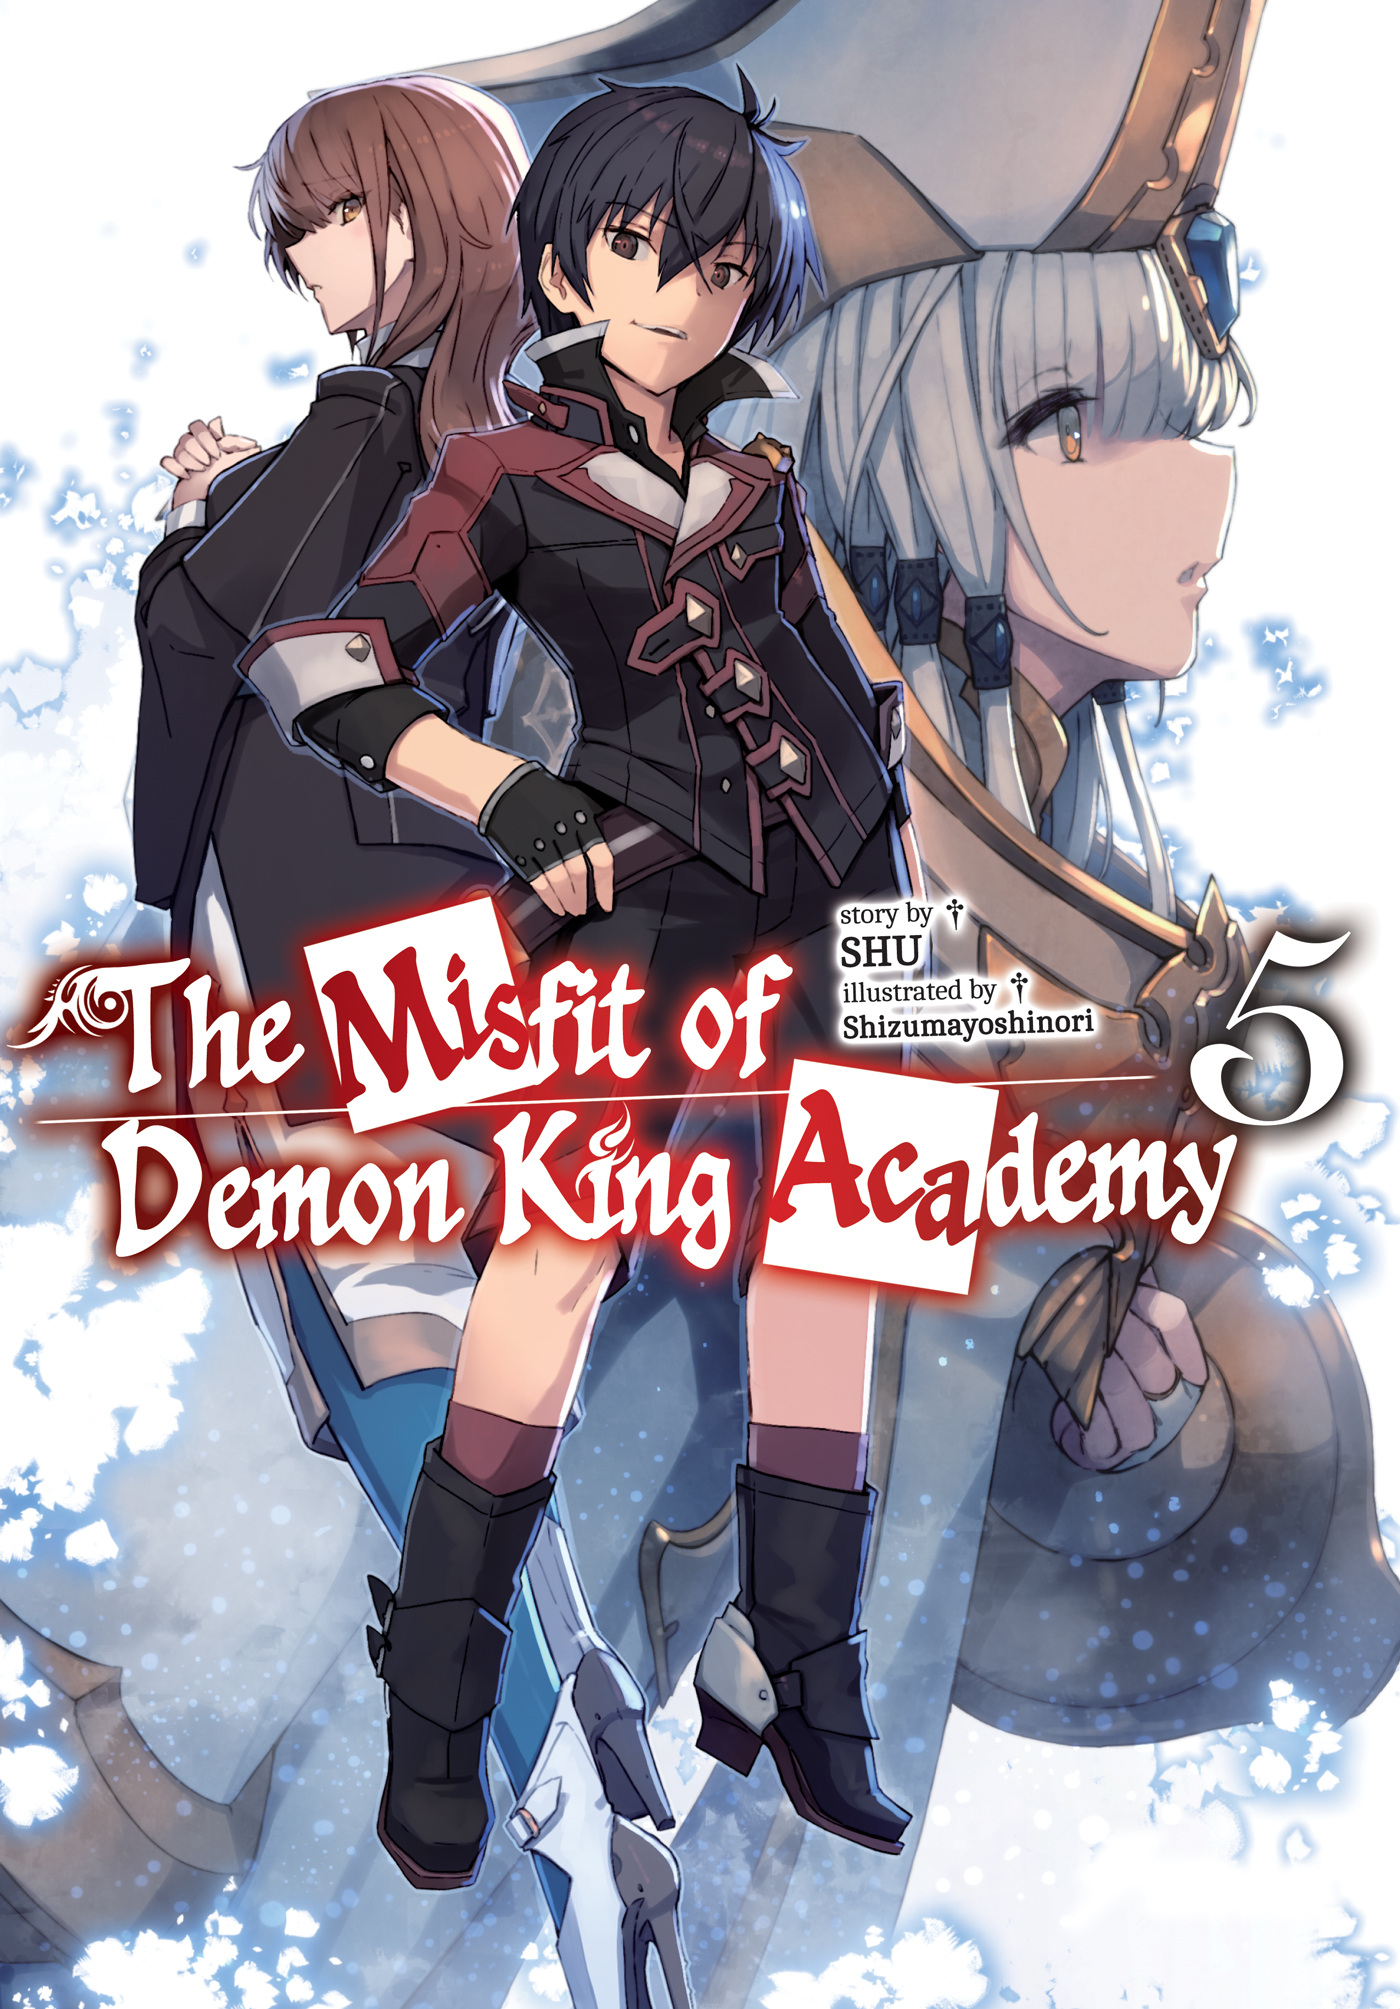  The Misfit of Demon King Academy: Volume 4 Act 2 (Light Novel)  (The Misfit of Demon King Academy (Light Novel) Book 5) eBook : SHU,  Shizumayoshinori, Z., Mana: Kindle Store